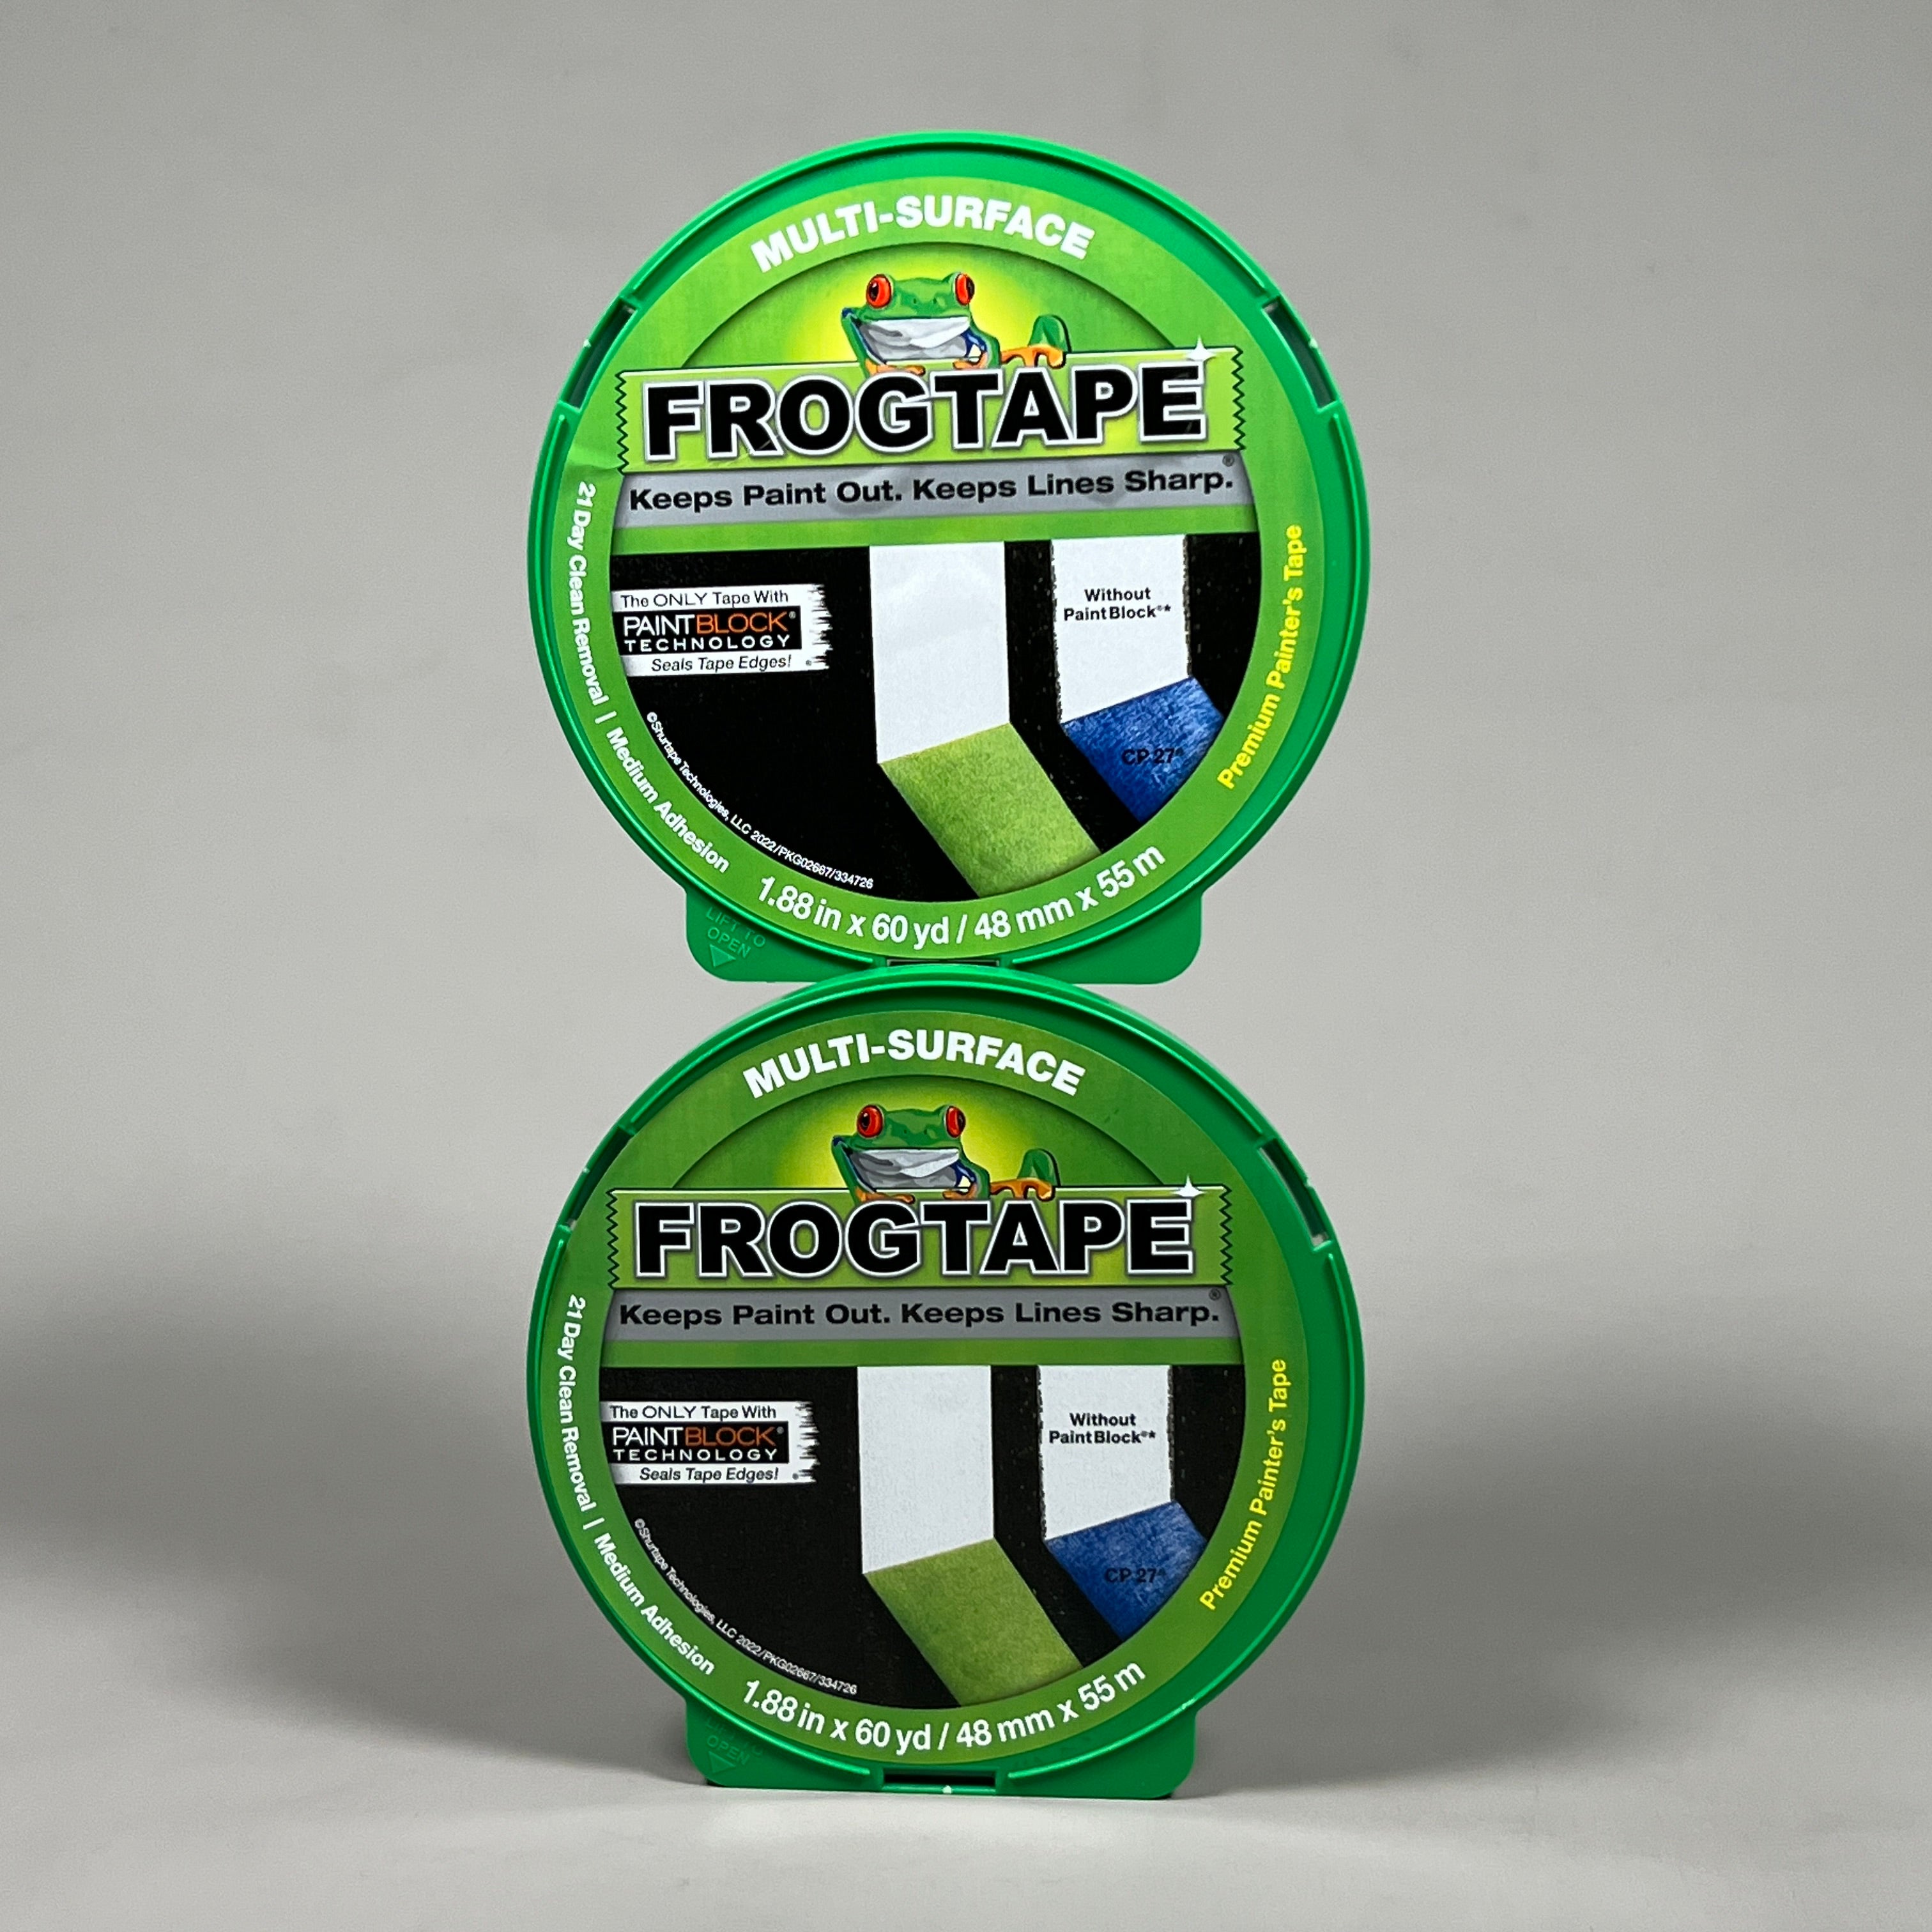 FrogTape Painter's Tape Medium 1.88 in x 60 yds.